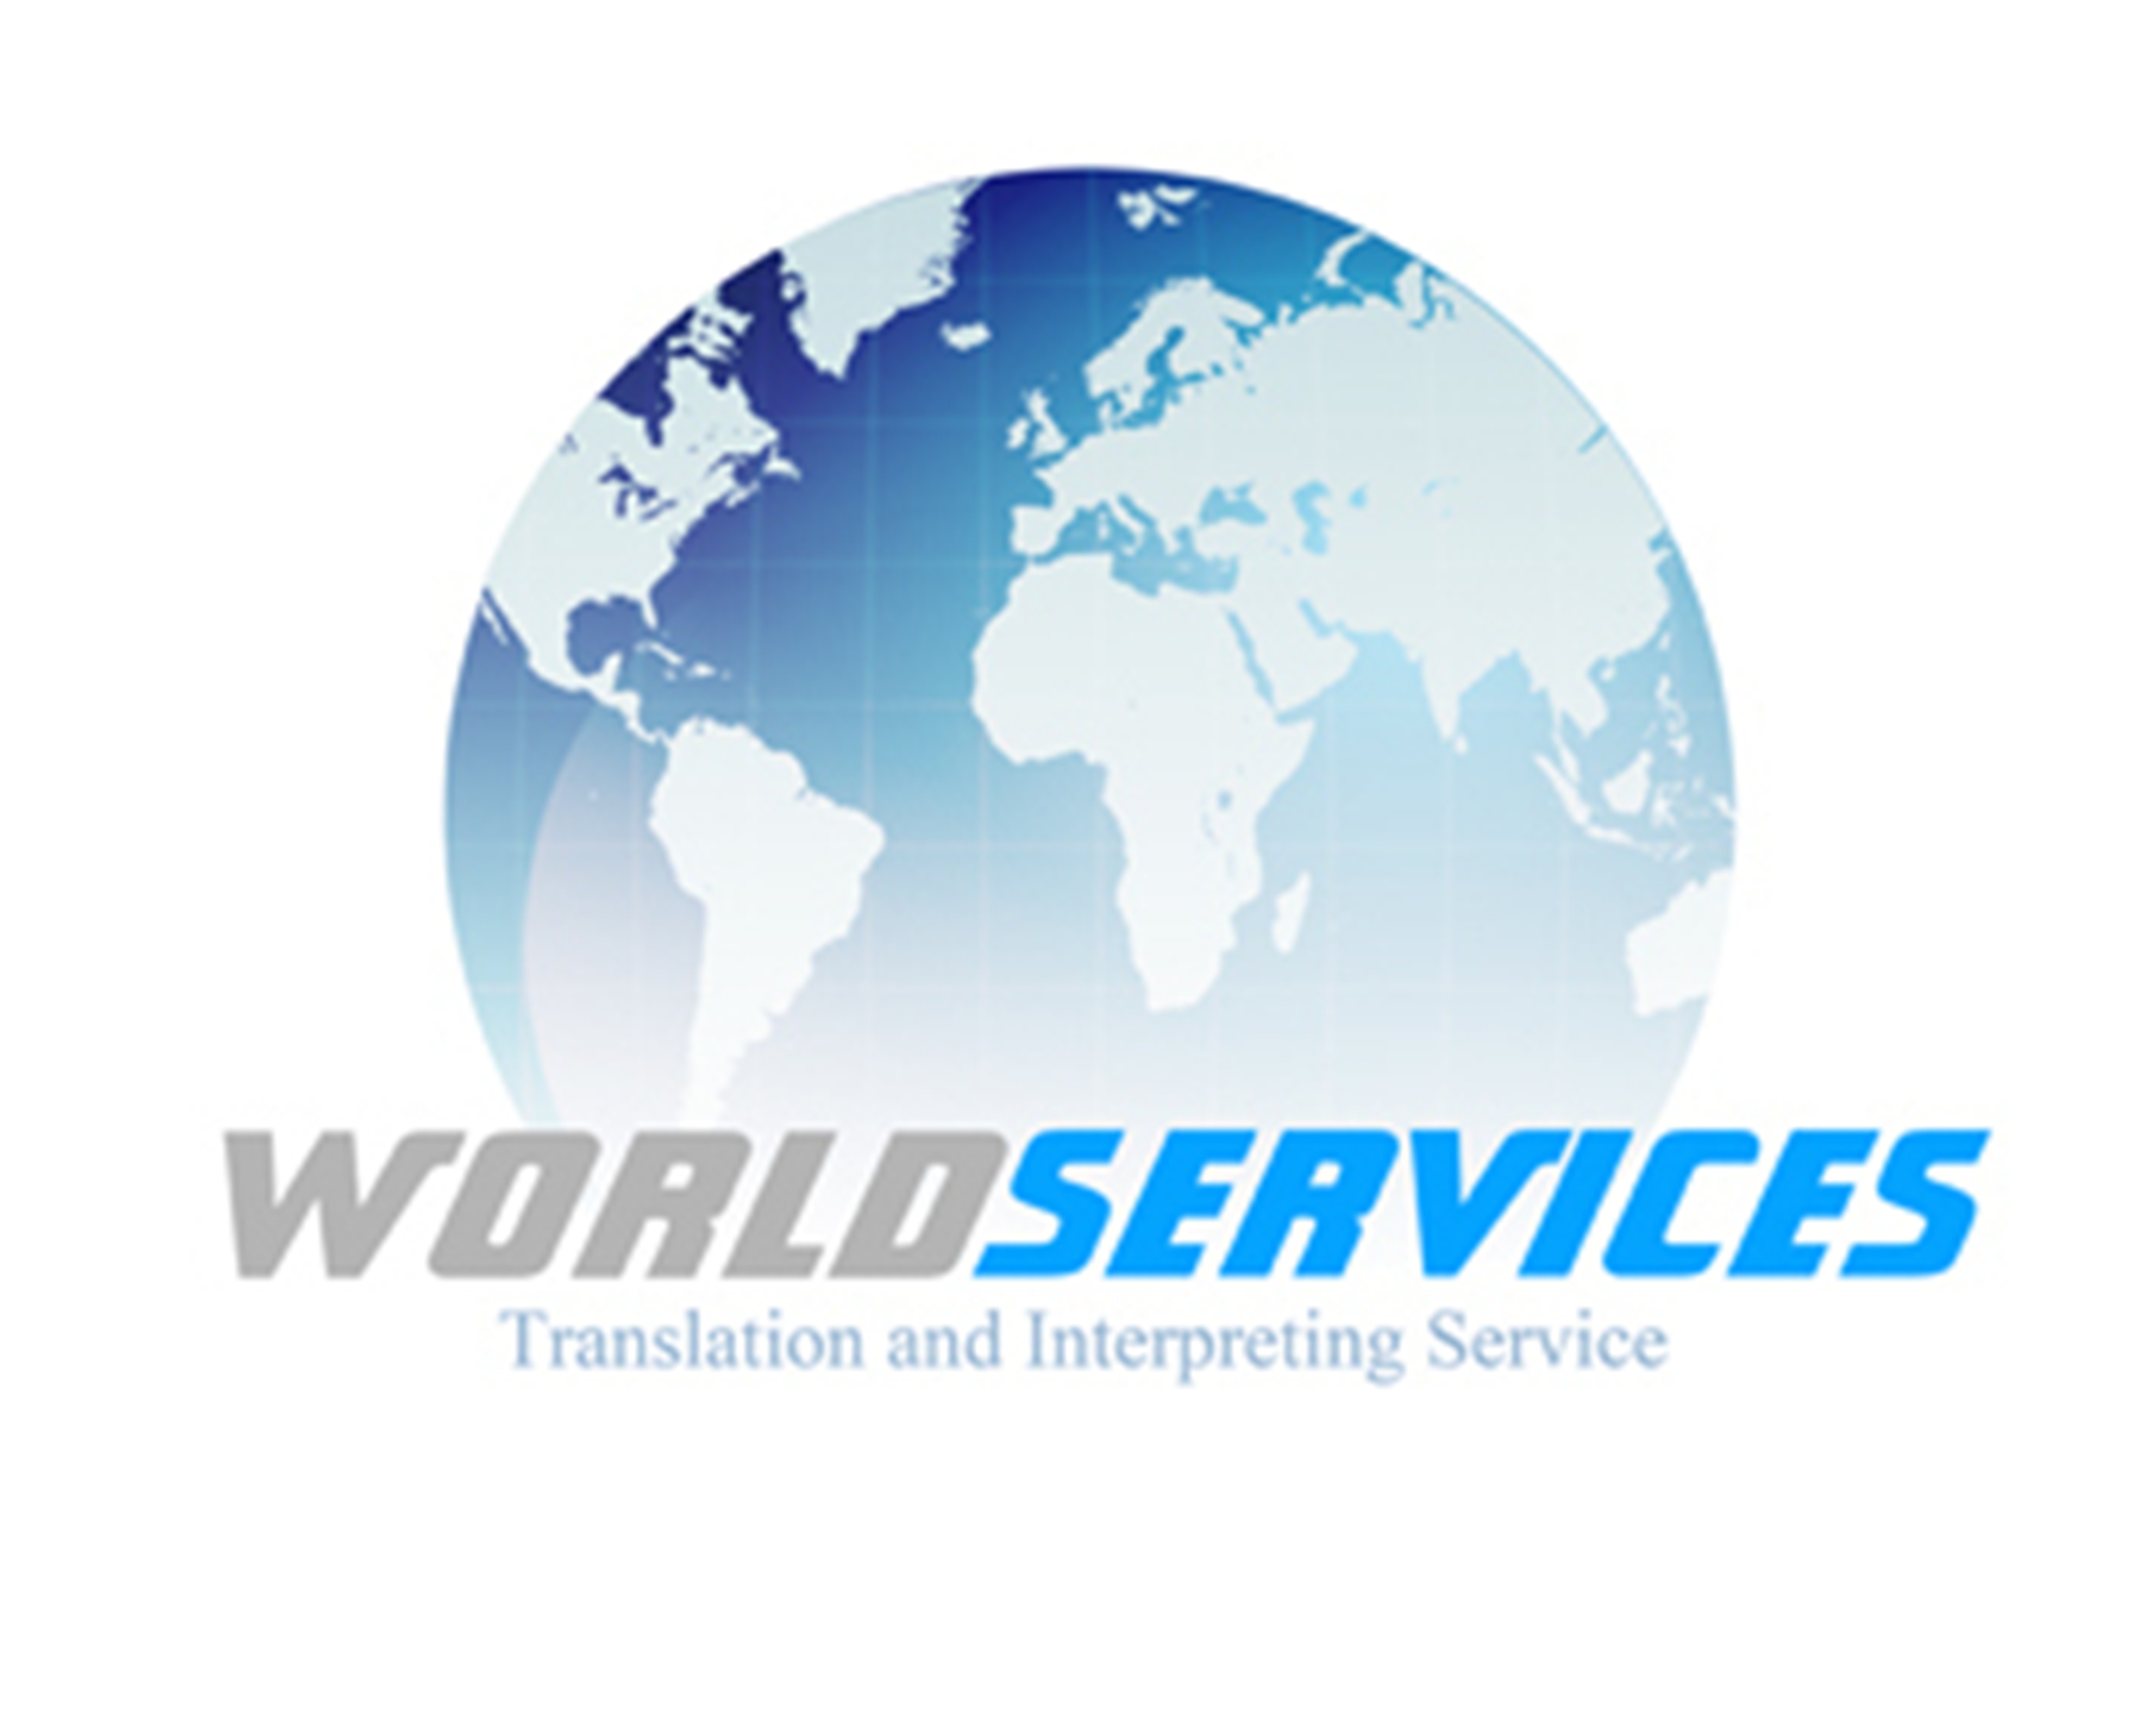 Service null. Ворлд сервис. World service. Translation service logo.